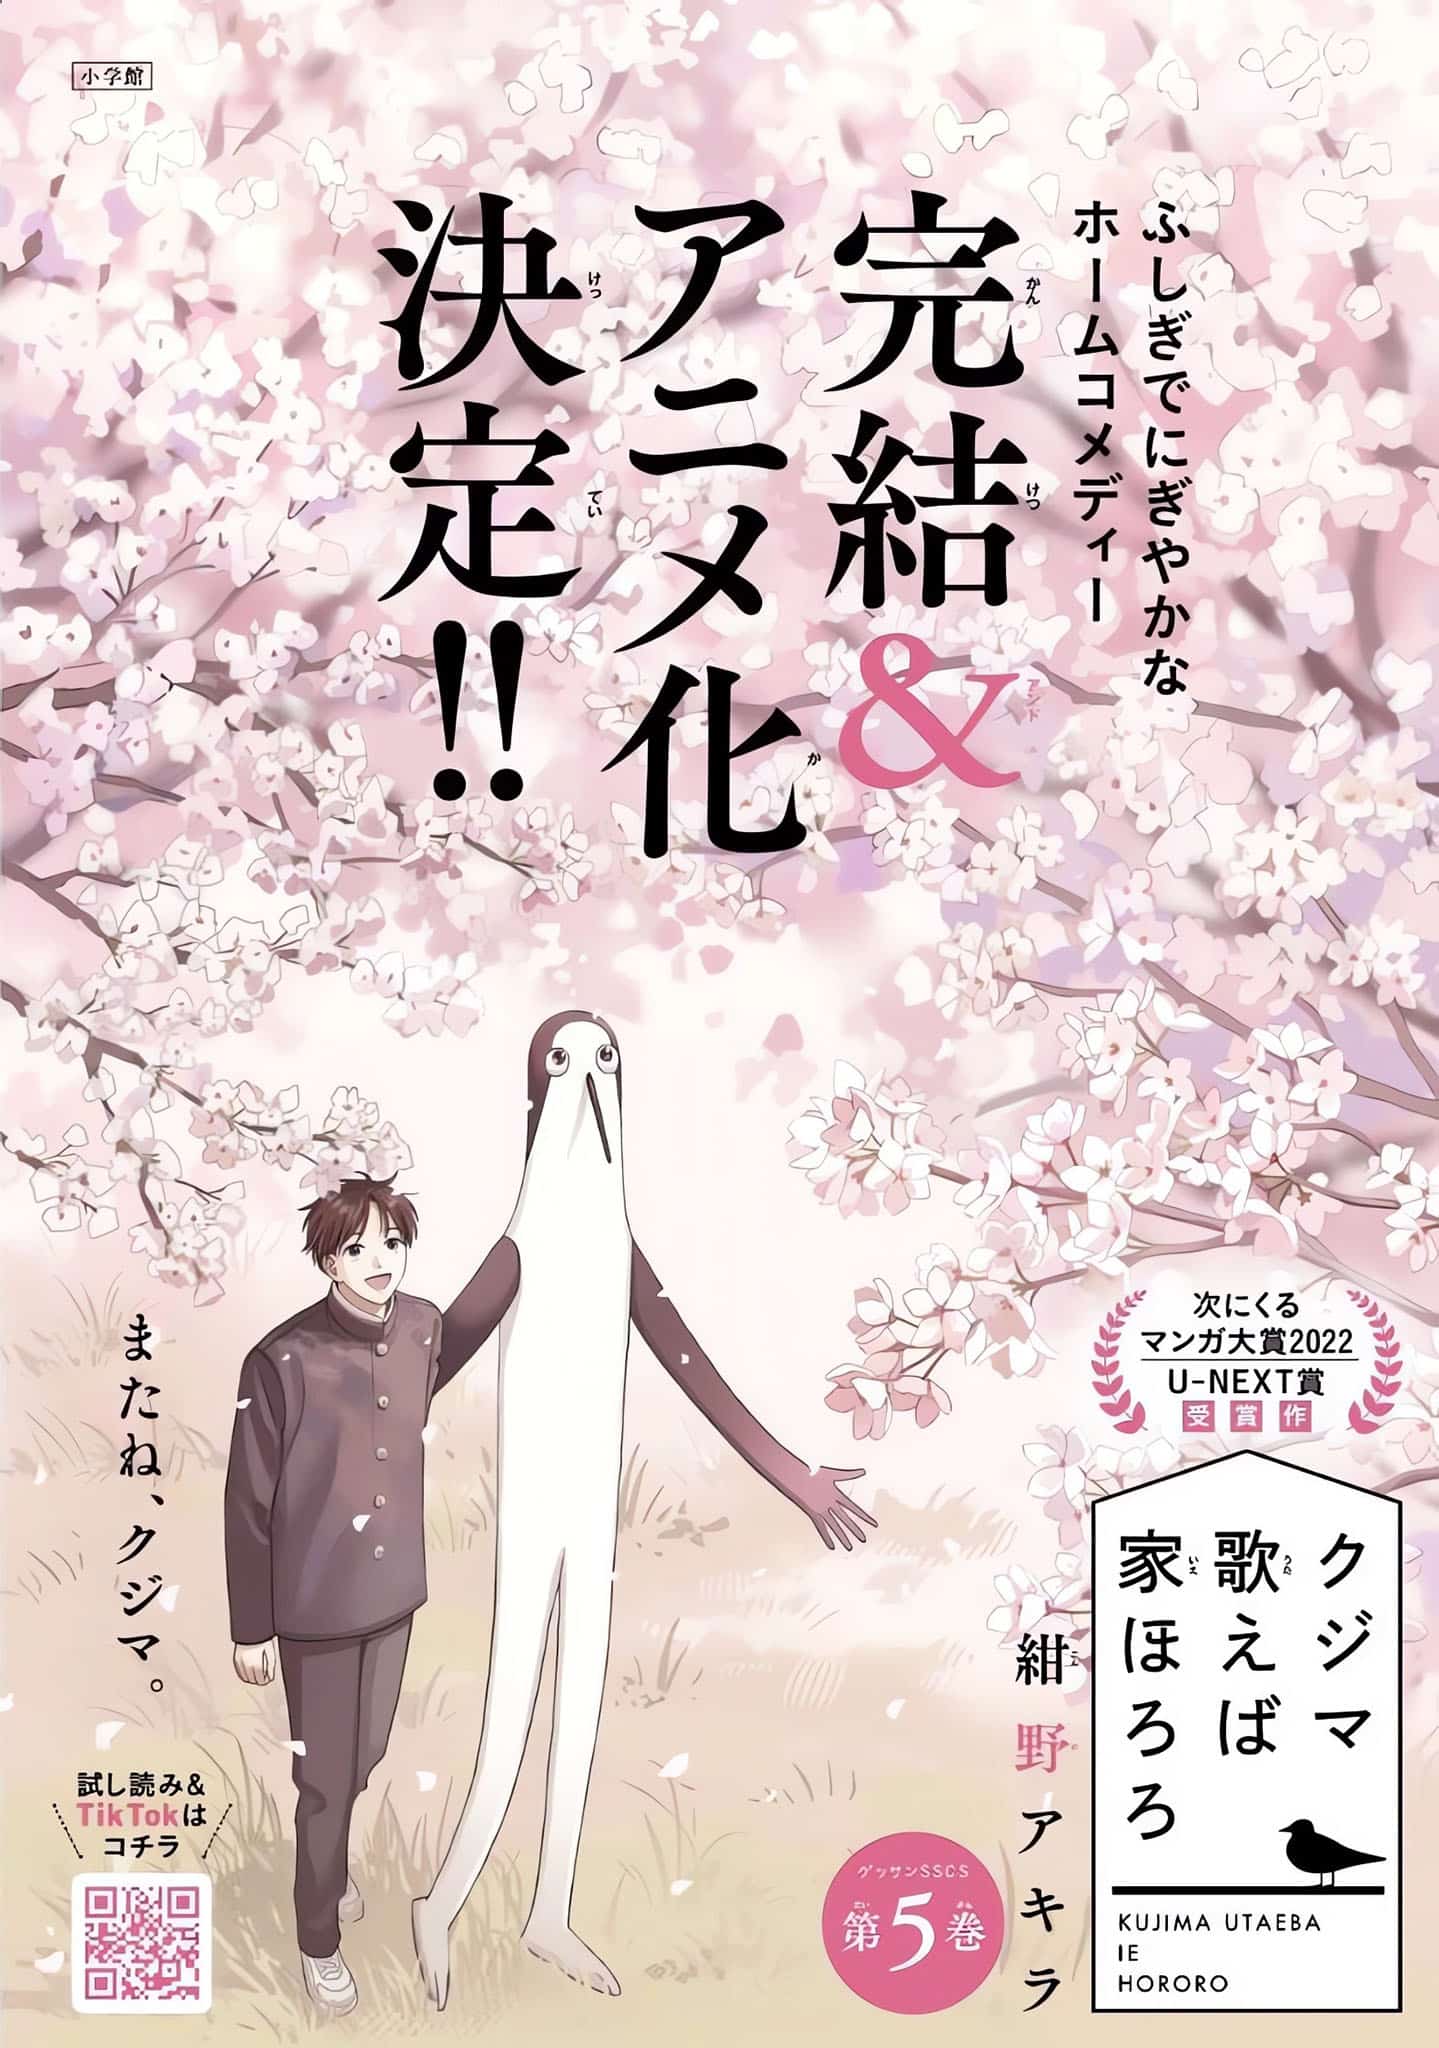 Annonce de l'anime Kujima Utaeba Ie Hororo.